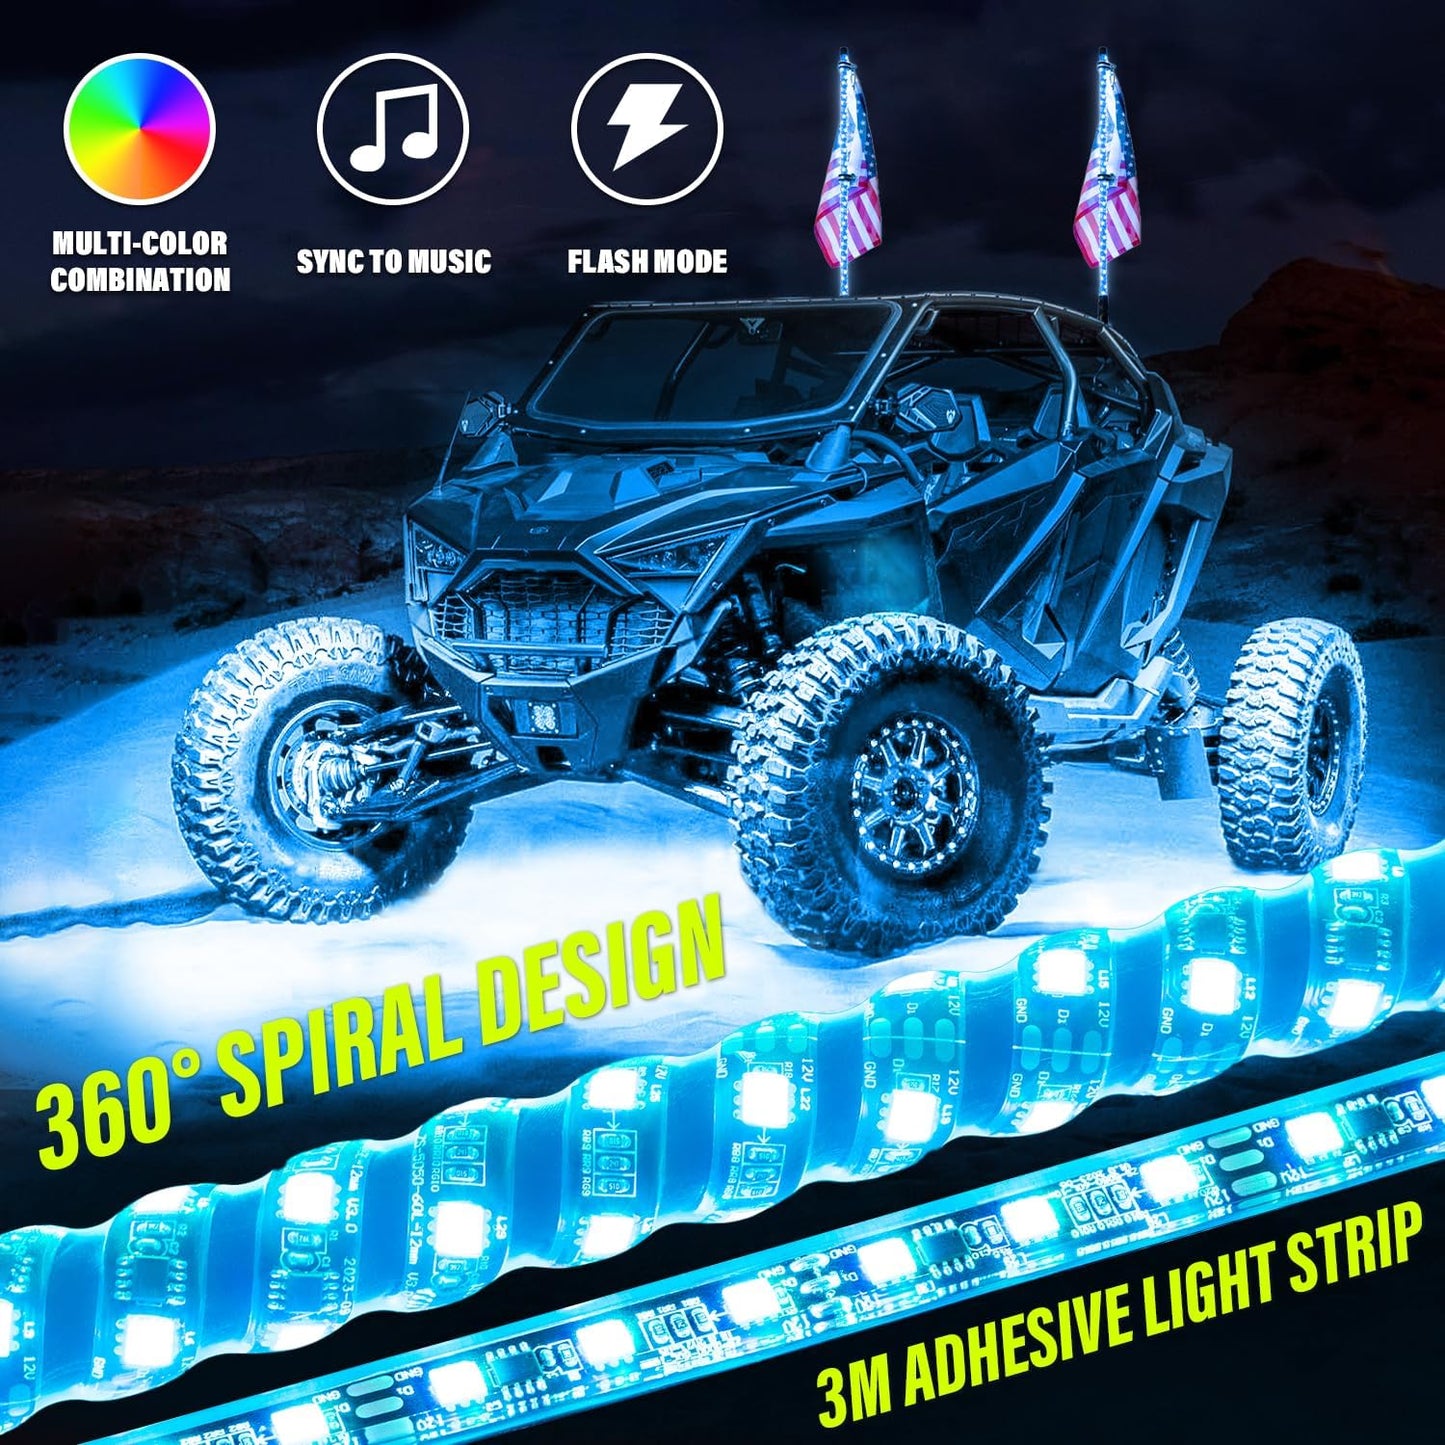 2PCS 3/4FT Whip Lights and 12Pcs Underglow Kit,300 Colors 178 Modes,Remote/APP Controfor Off-Road UTV ATV Polaris RZR Truck